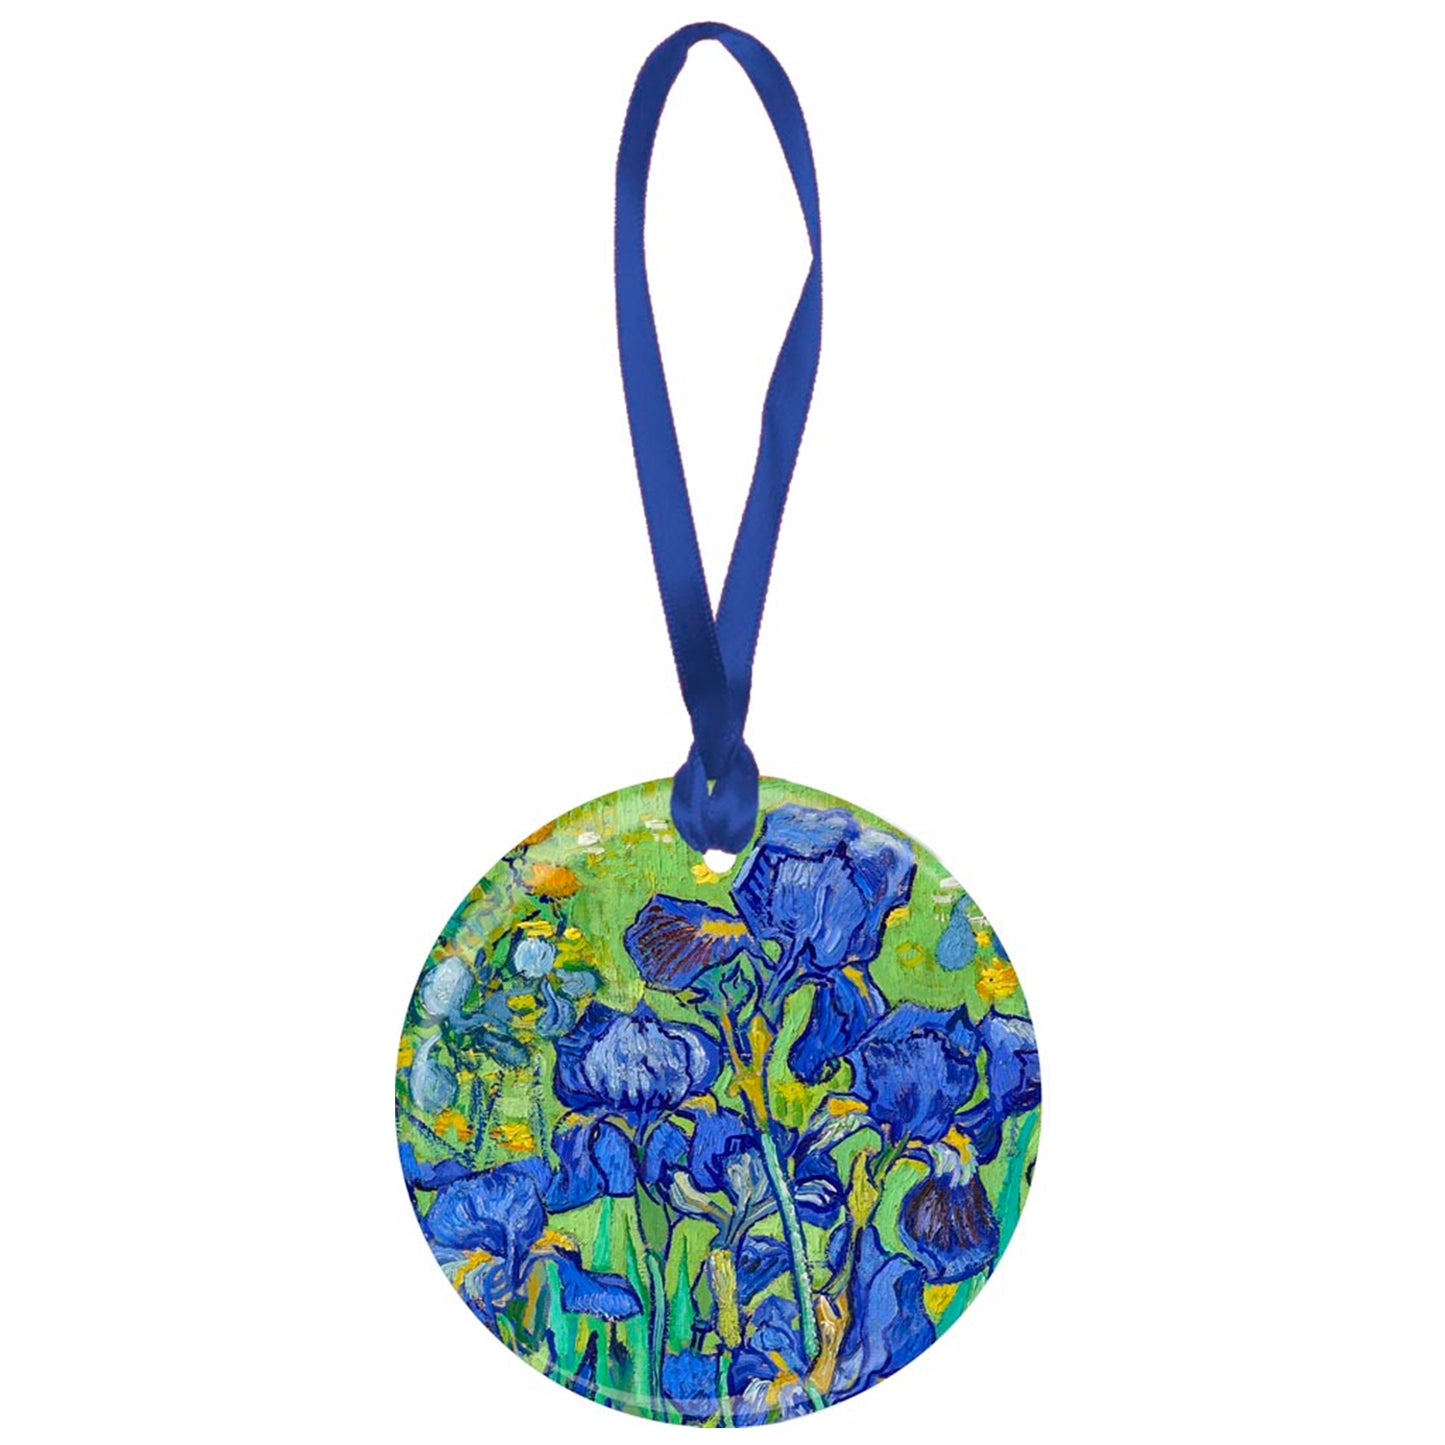 Van Gogh's "Irises" Porcelain Ornament